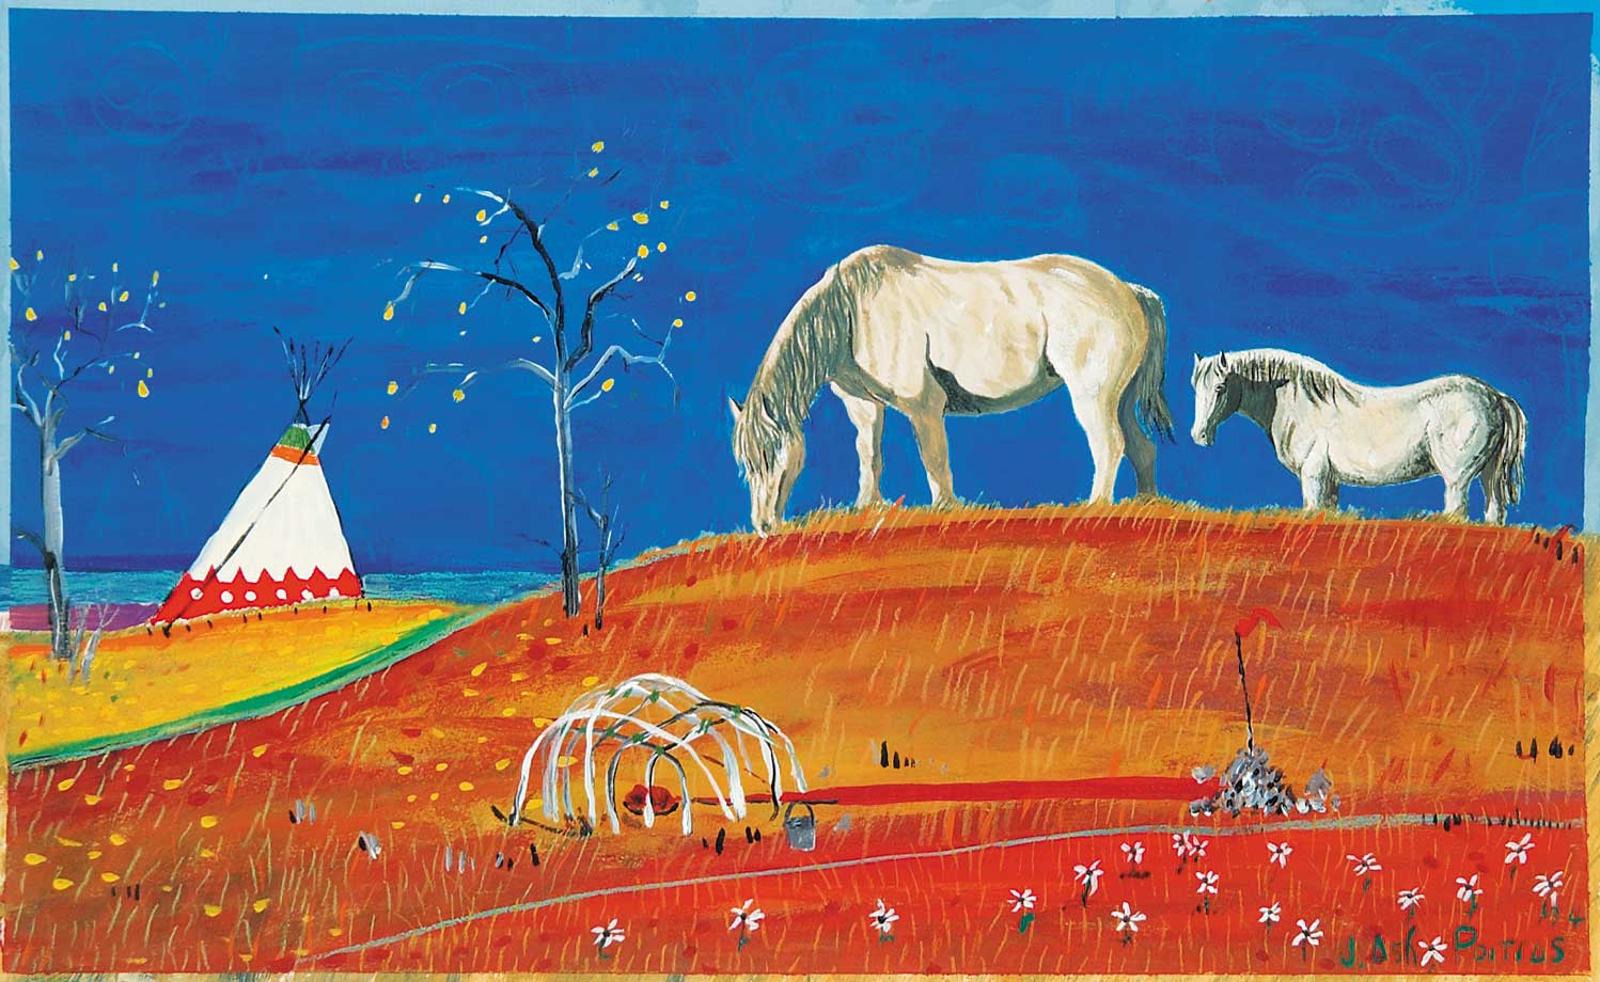 Jane Ash Poitras (1951) - Untitled - Horses, Teepee and Sweatlodge